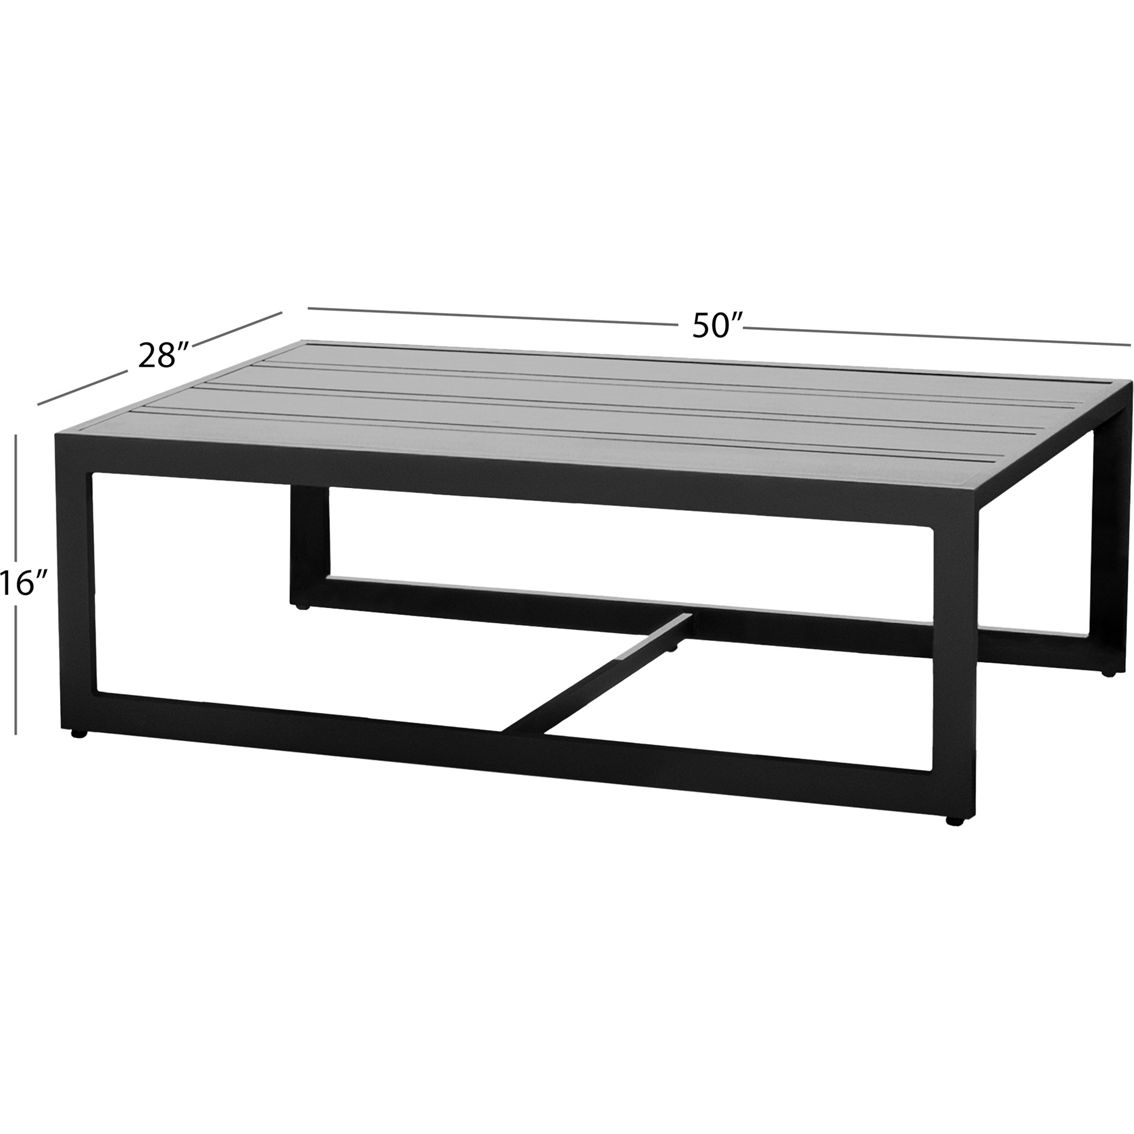 Abbyson Tori Outdoor 3-pc Nesting Table Set, White Fabric & Black Frame - Image 2 of 5